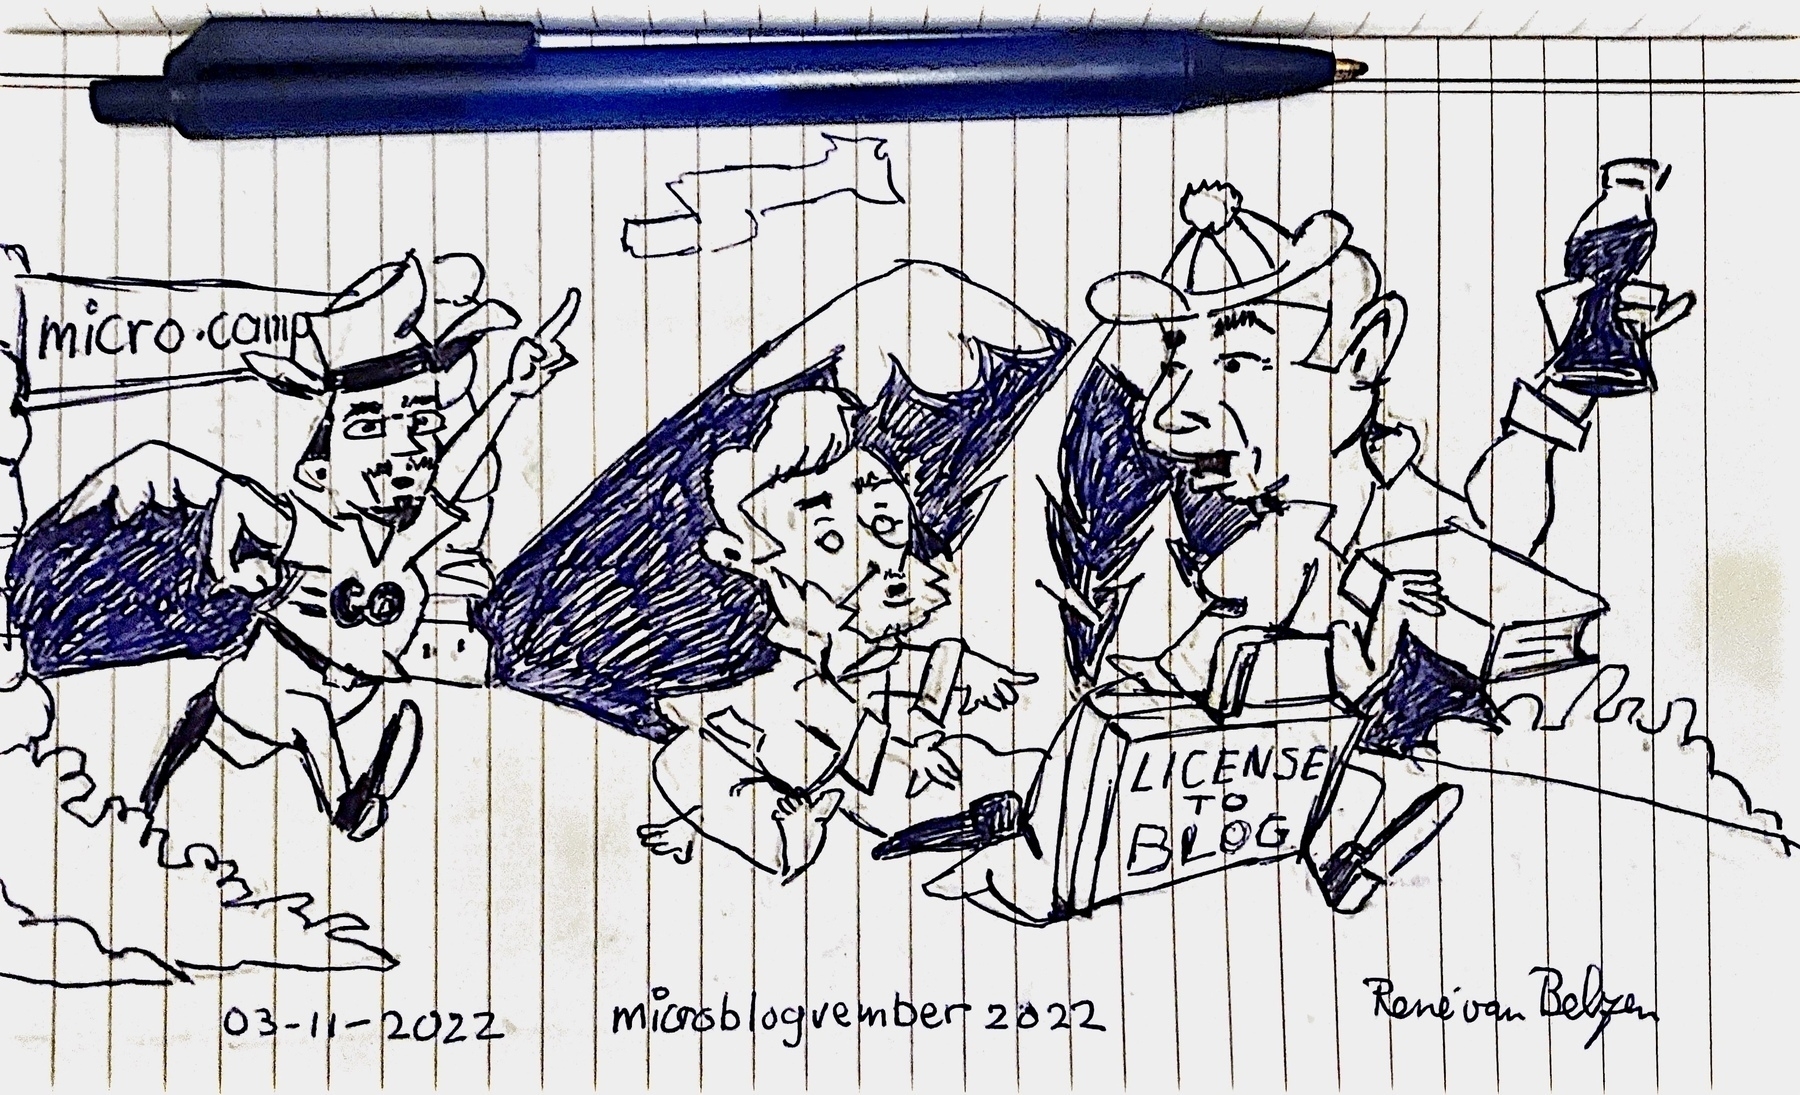 Yogi Bear inspired cartoon drawn in ballpoint pen in a notebook